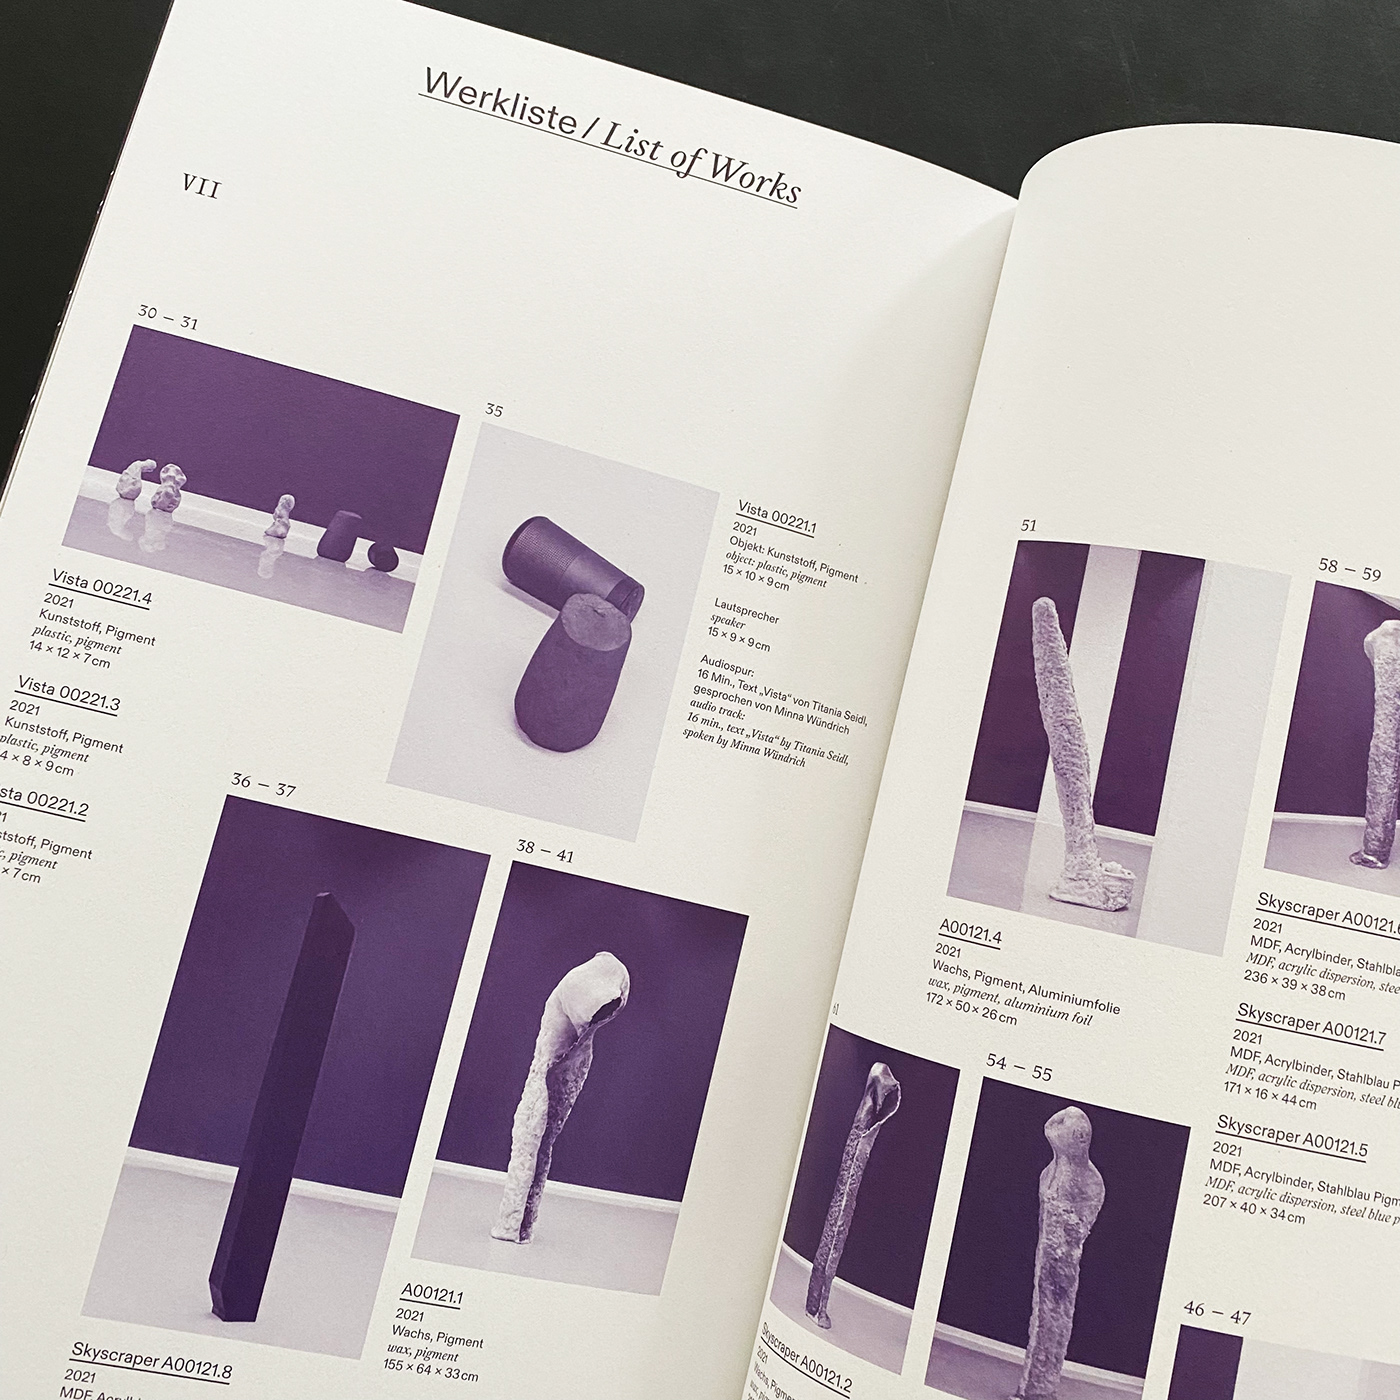 abc dinamo book book design catalog editorial Exhibition Editorial graphic design  Layout print typography  